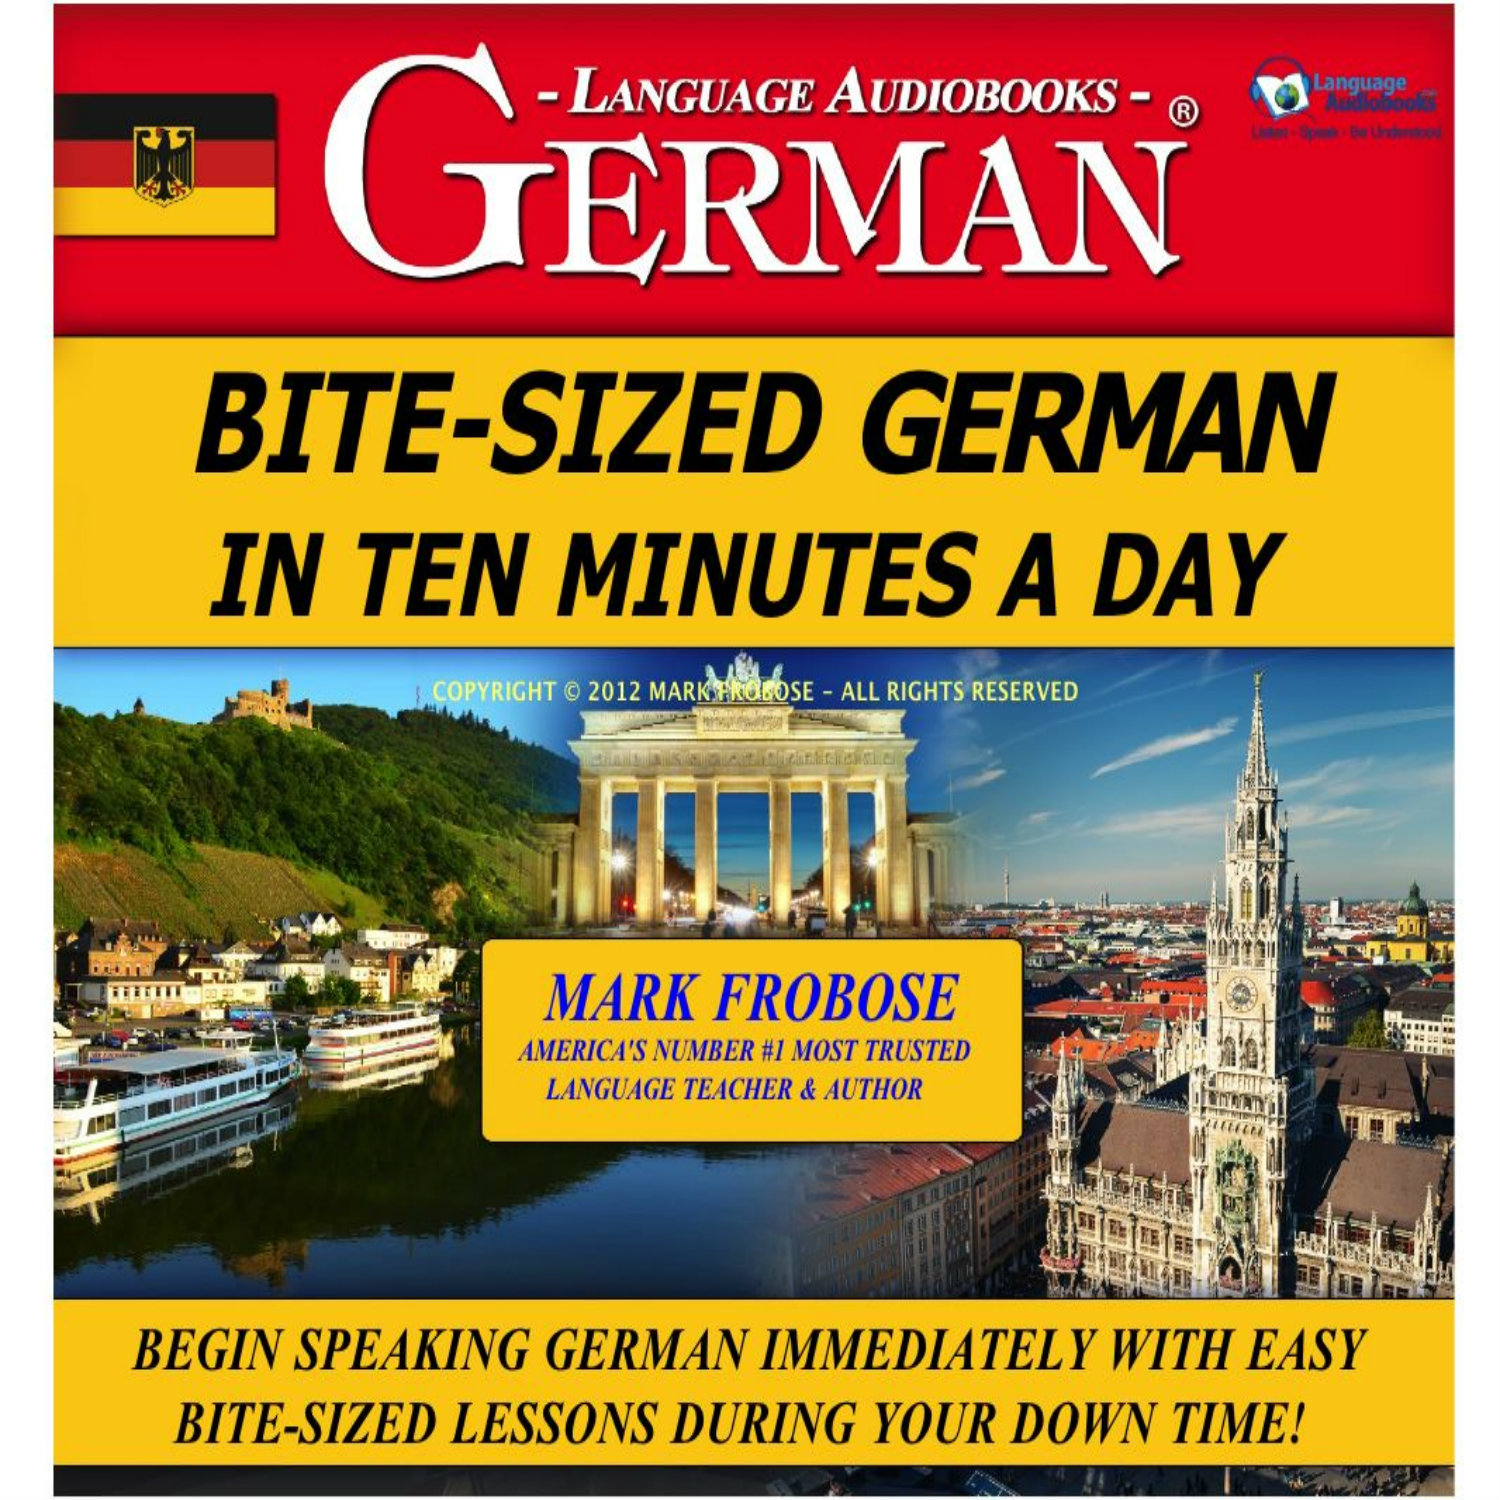 BITESIZED GERMAN IN TEN MINUTES A DAY